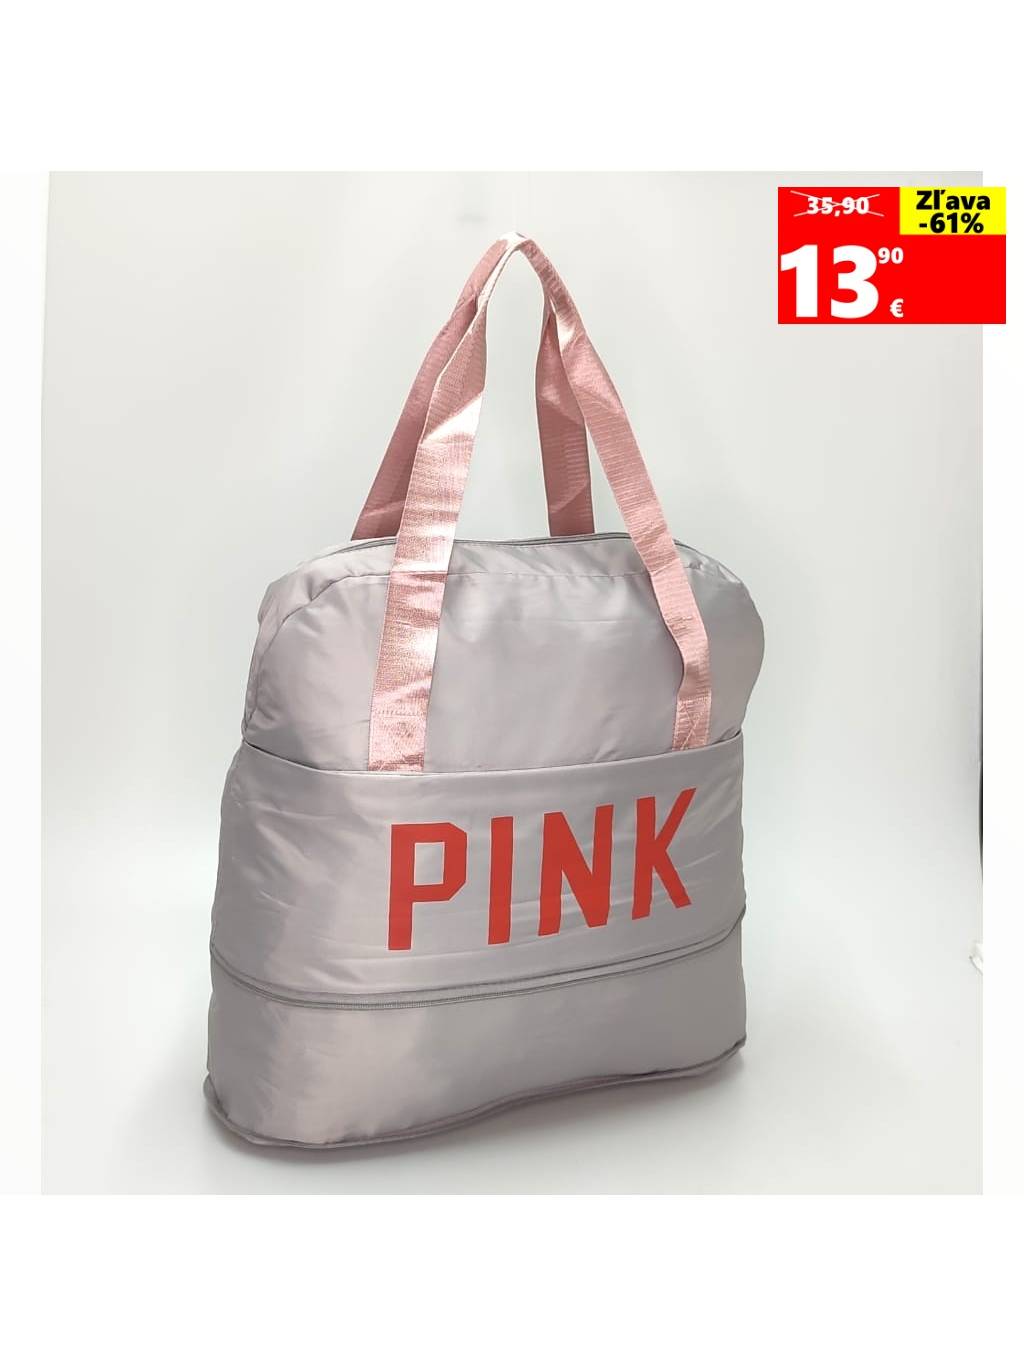 A Multifunkčná taška 1030 sivá www.kabelky vypredaj (1)